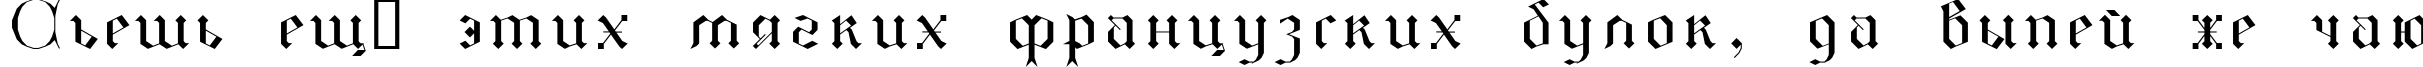 Пример написания шрифтом GothicI текста на русском